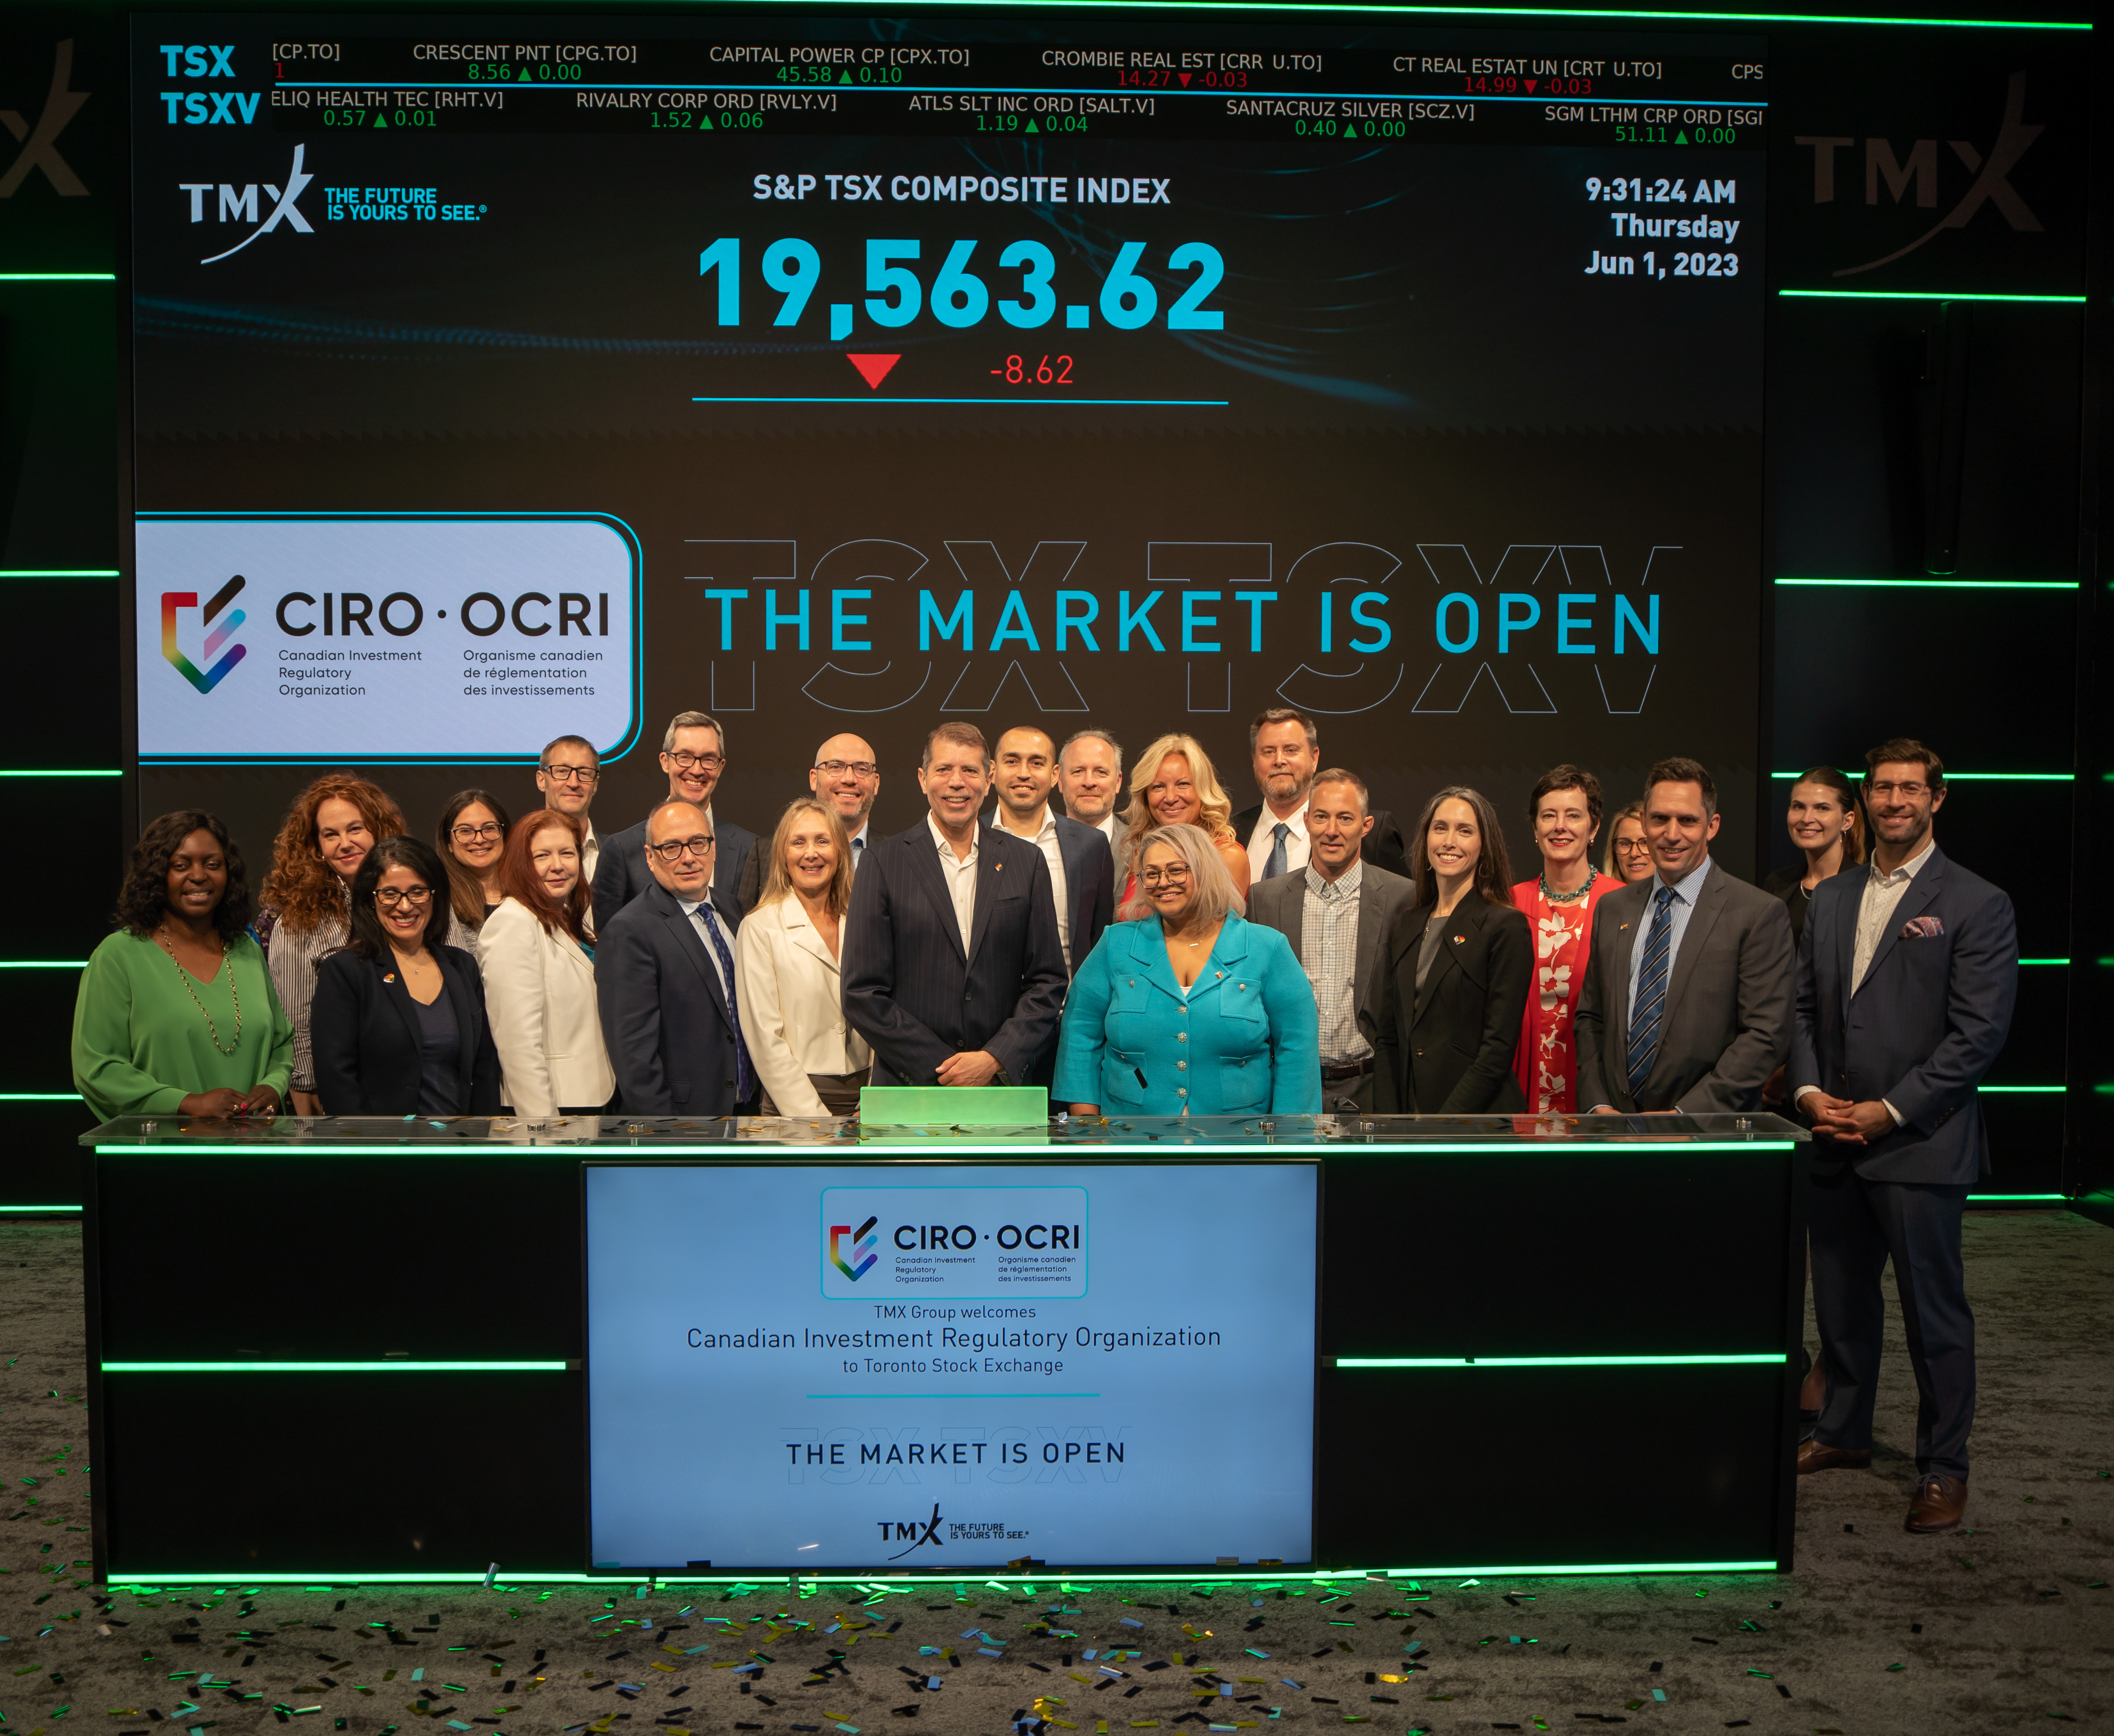 CIRO executives and employees opened the Toronto markets